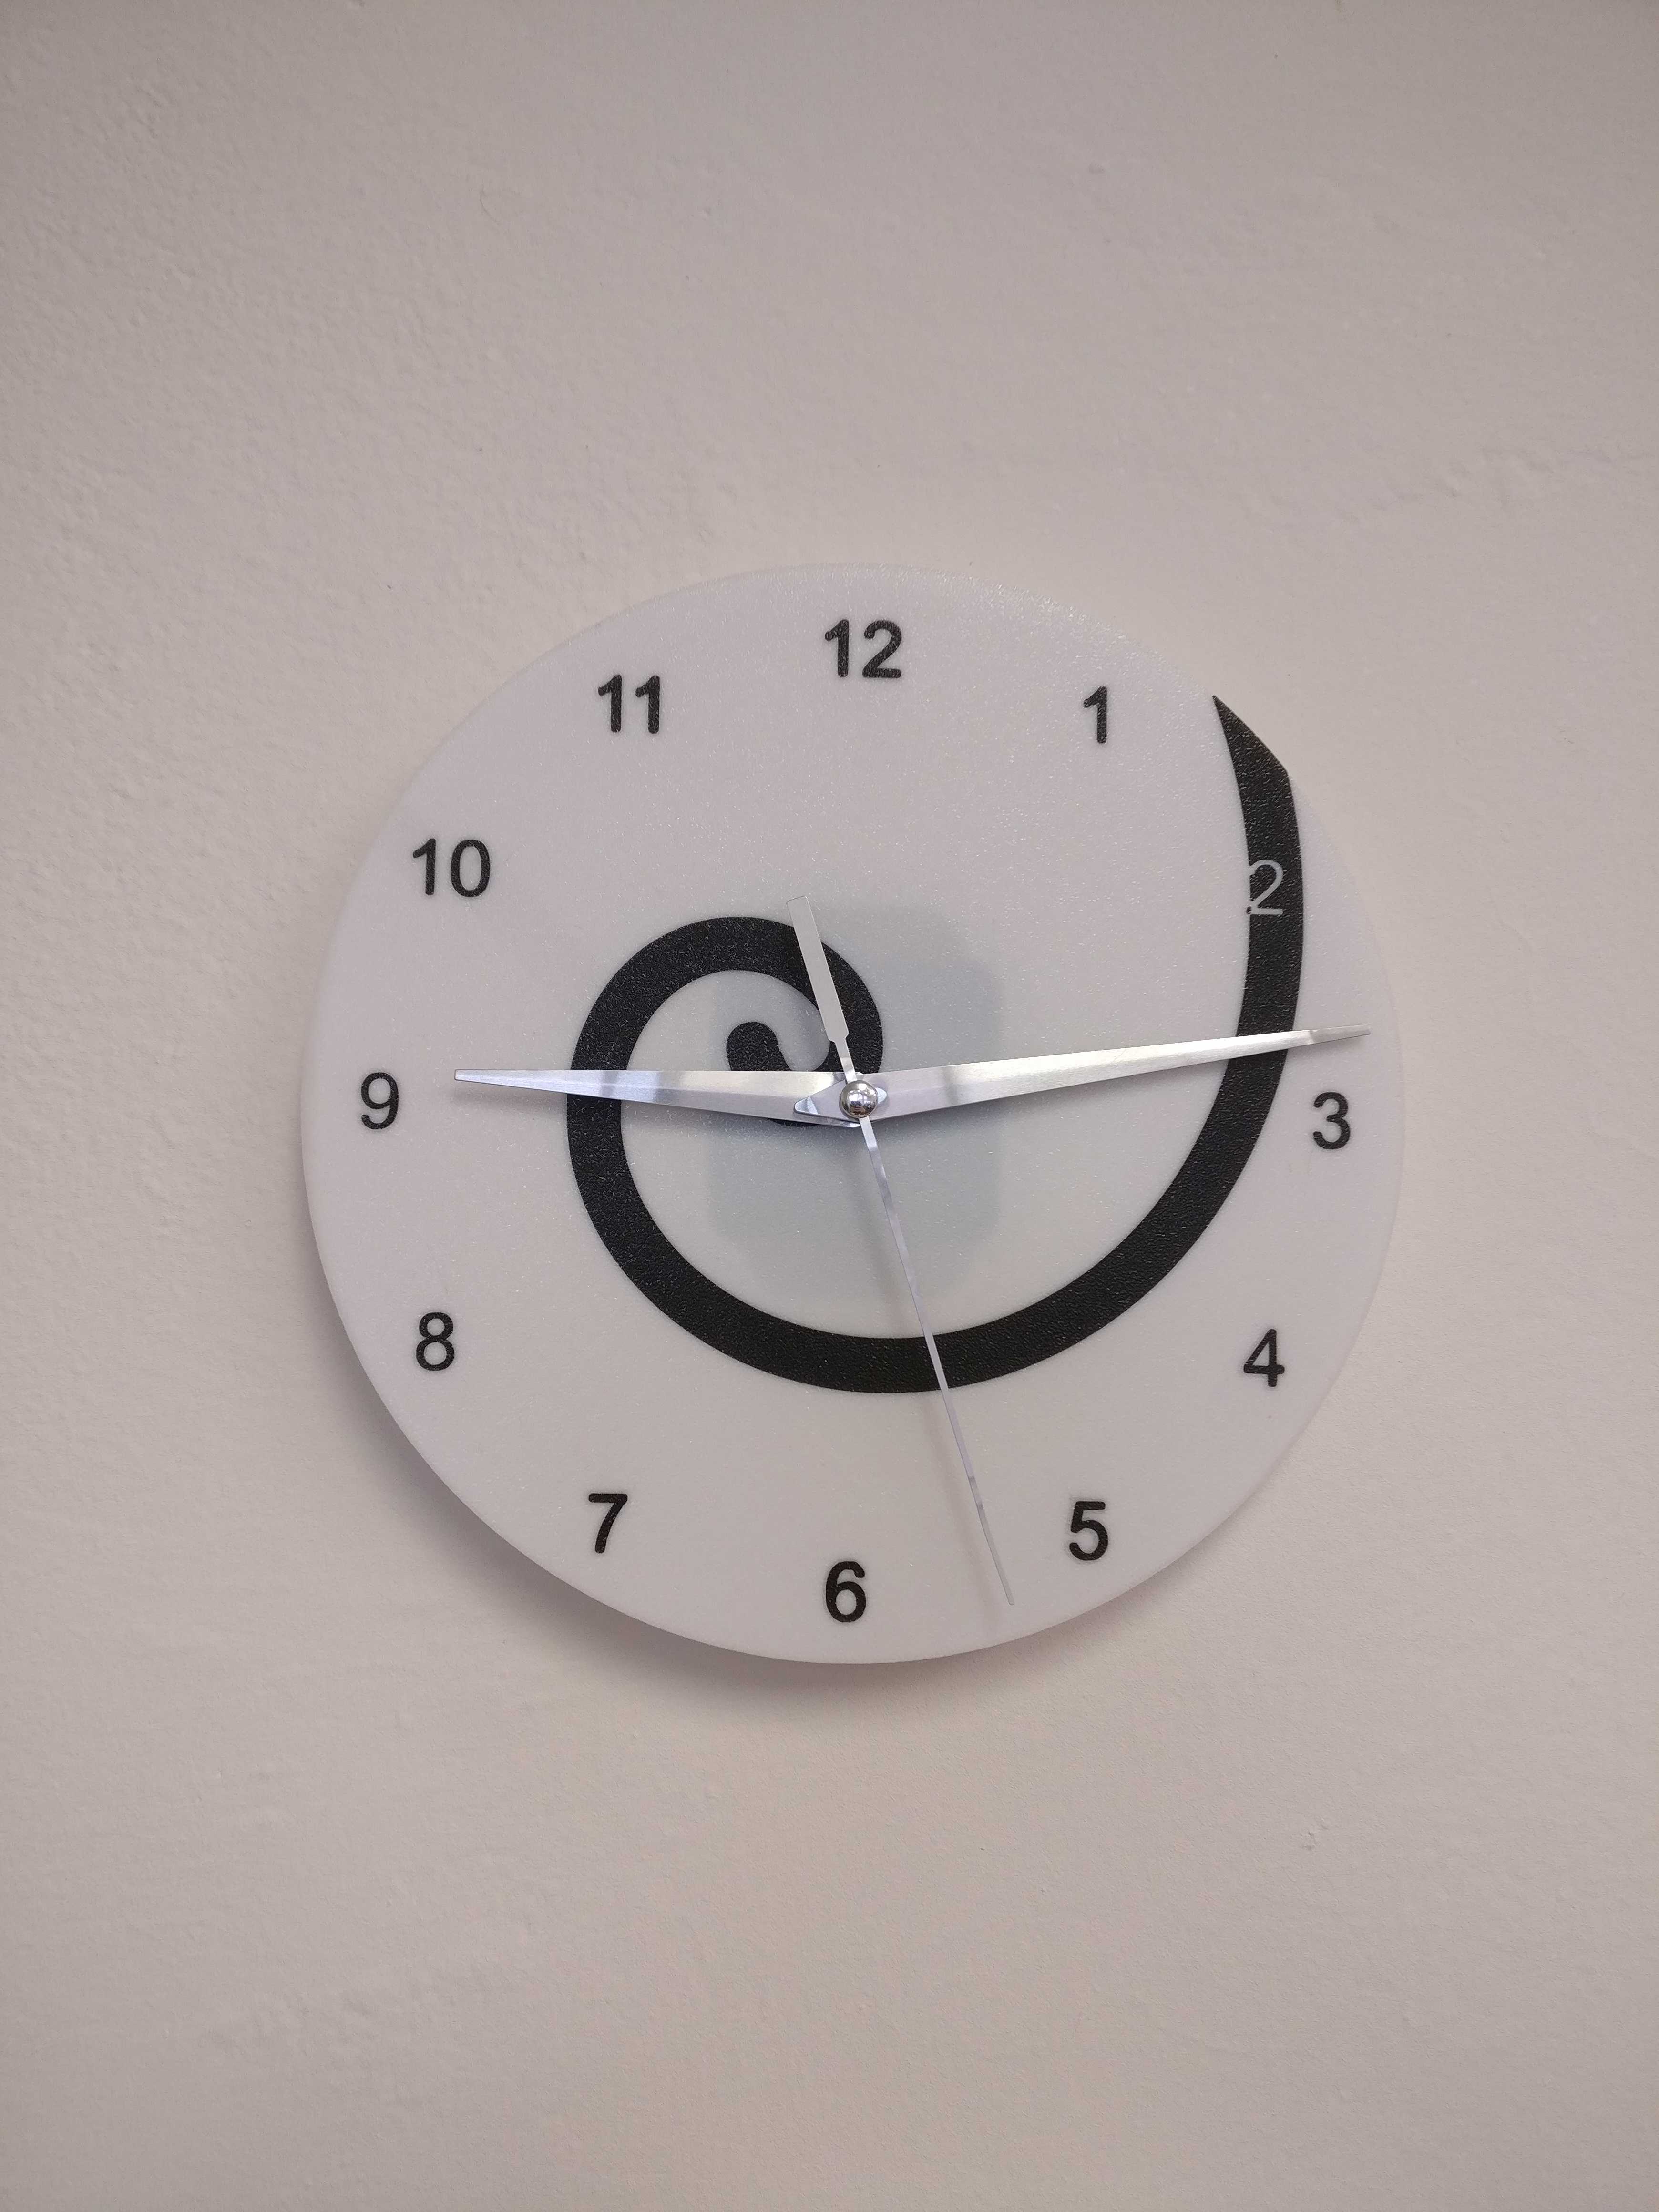 Fibonacci Spiral Clock